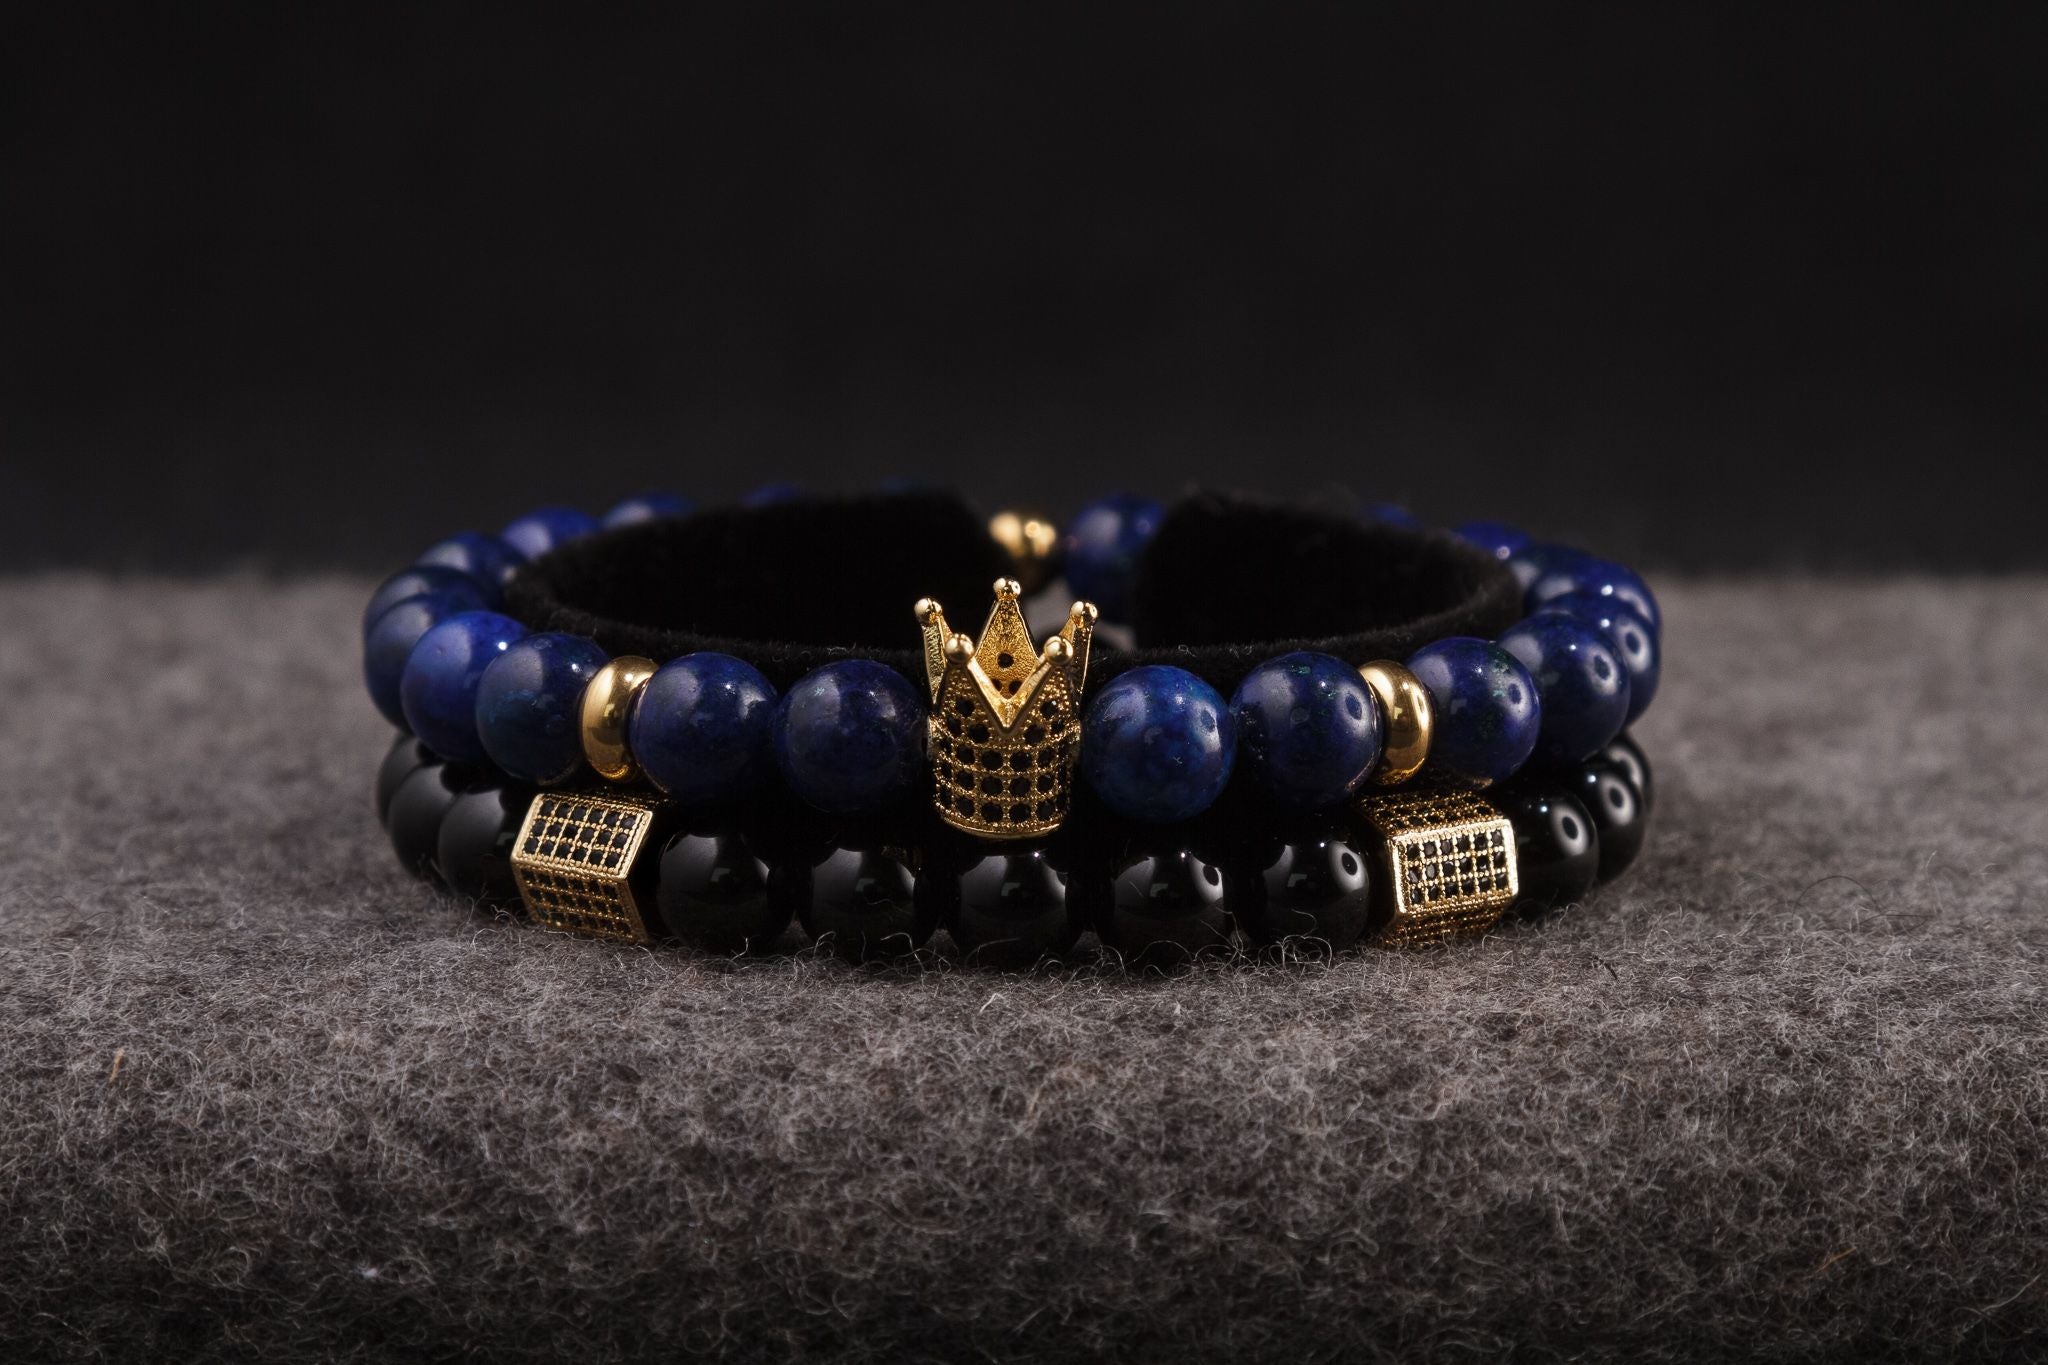 UNCOMMON Men's Beads Bracelet One Gold Jeweled Crown Charm Blue Jasper Stone Beads